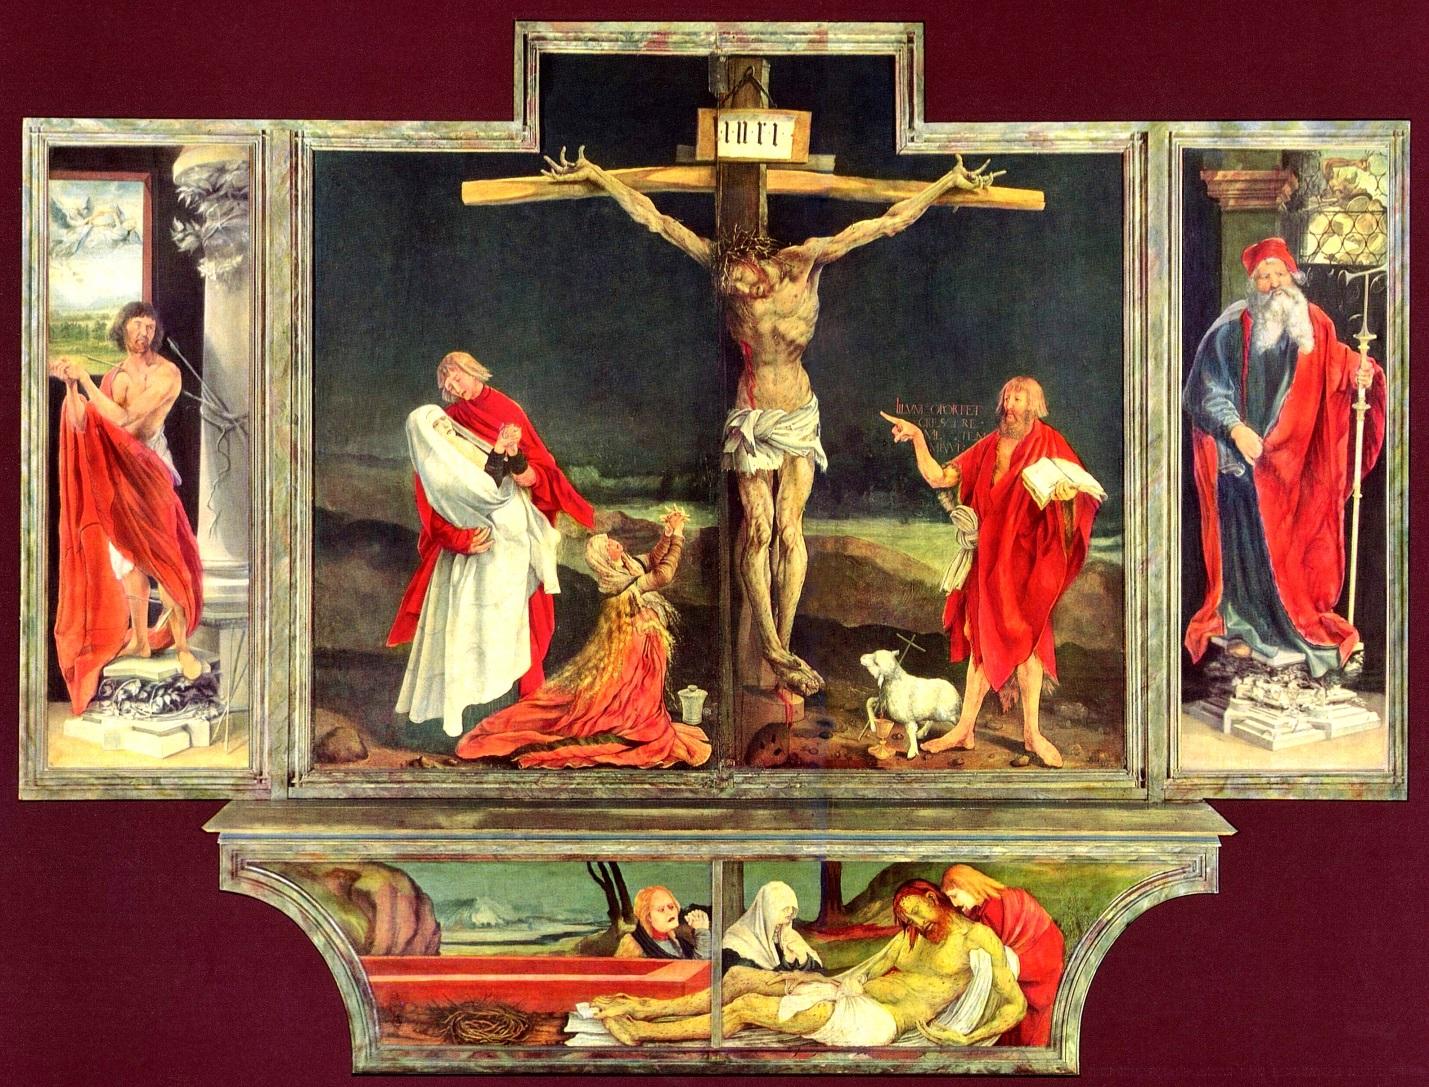 The Isenheim Altarpiece painted by Matthias GrÃ¼newald in 1512â1516 showing Jesus' crucifiction. It was GrÃ¼newald's greatest and largest work, painted for the Monastery of St Anthony in Isenheim near Colmar, France. Credit: Public domain